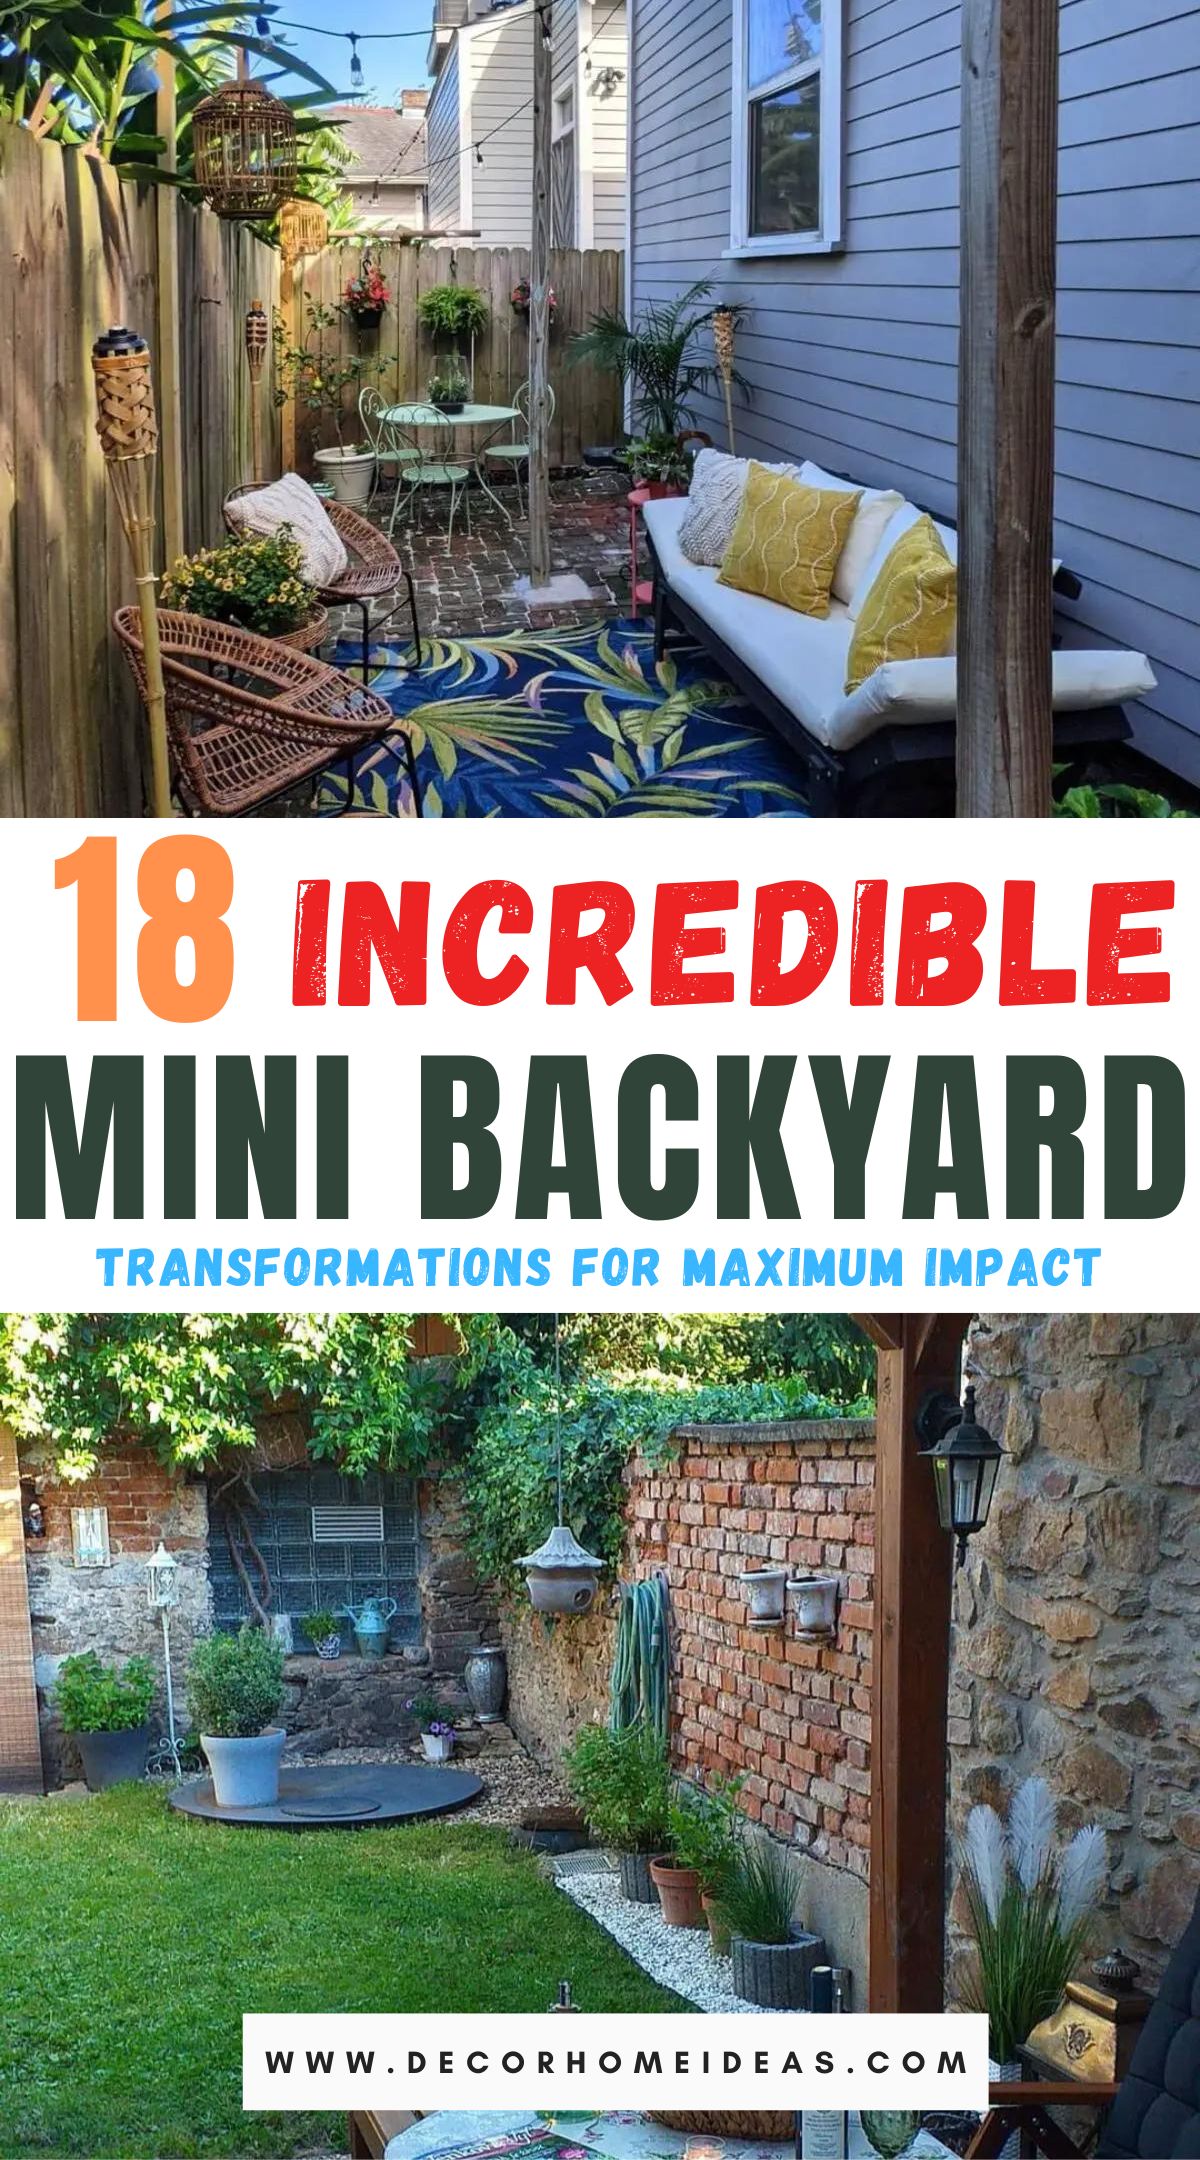 Mini Backyard Ideas and Designs